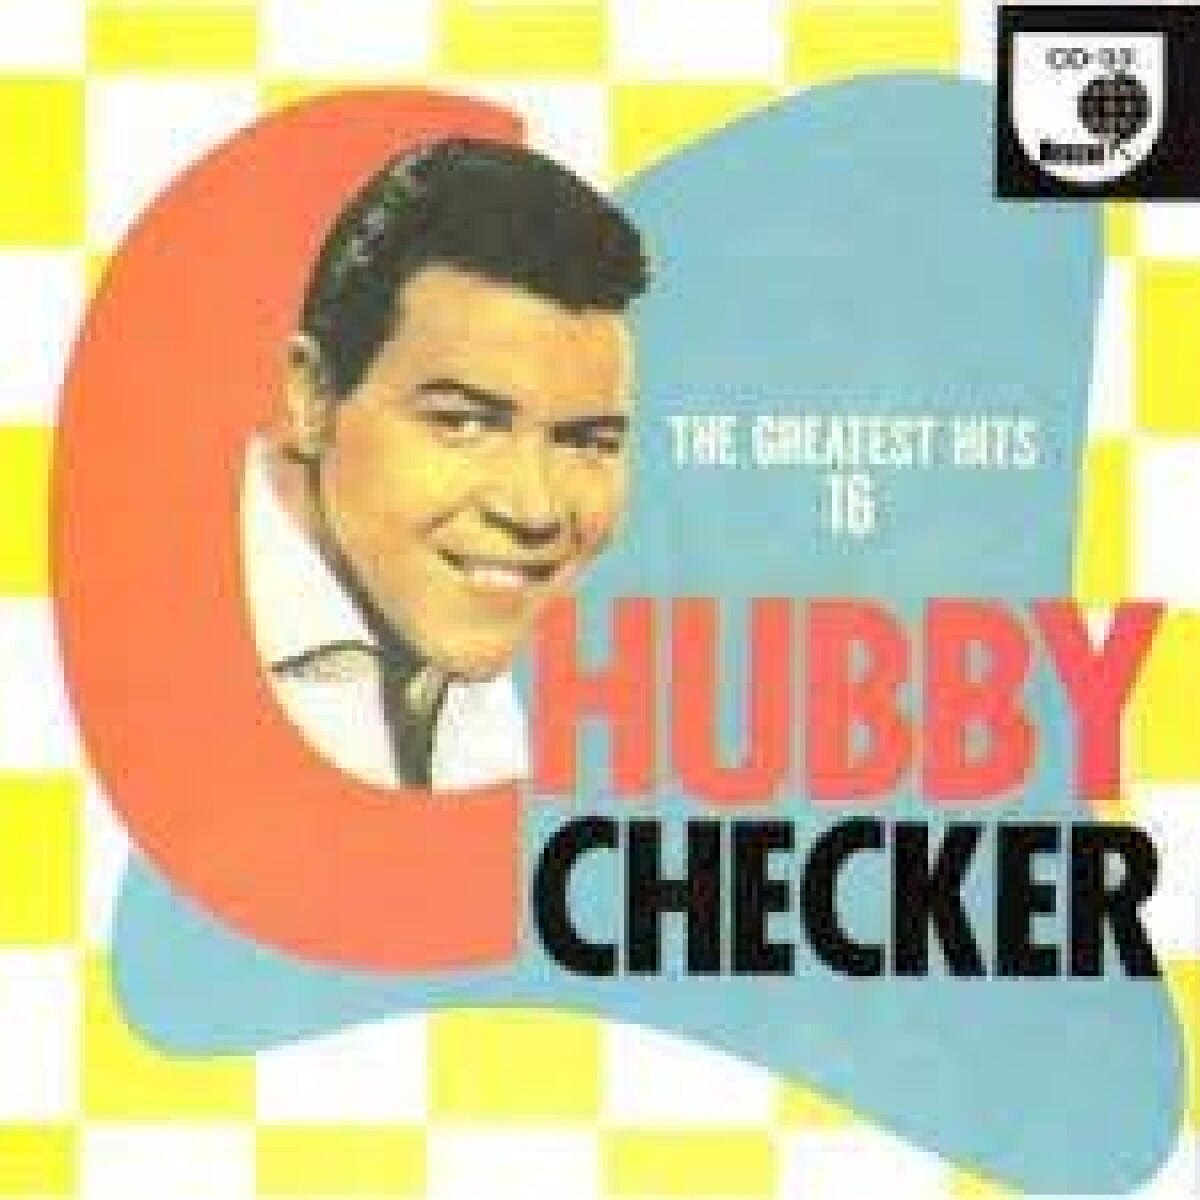 Checker Chubby-16 Greatest Hits Hq 